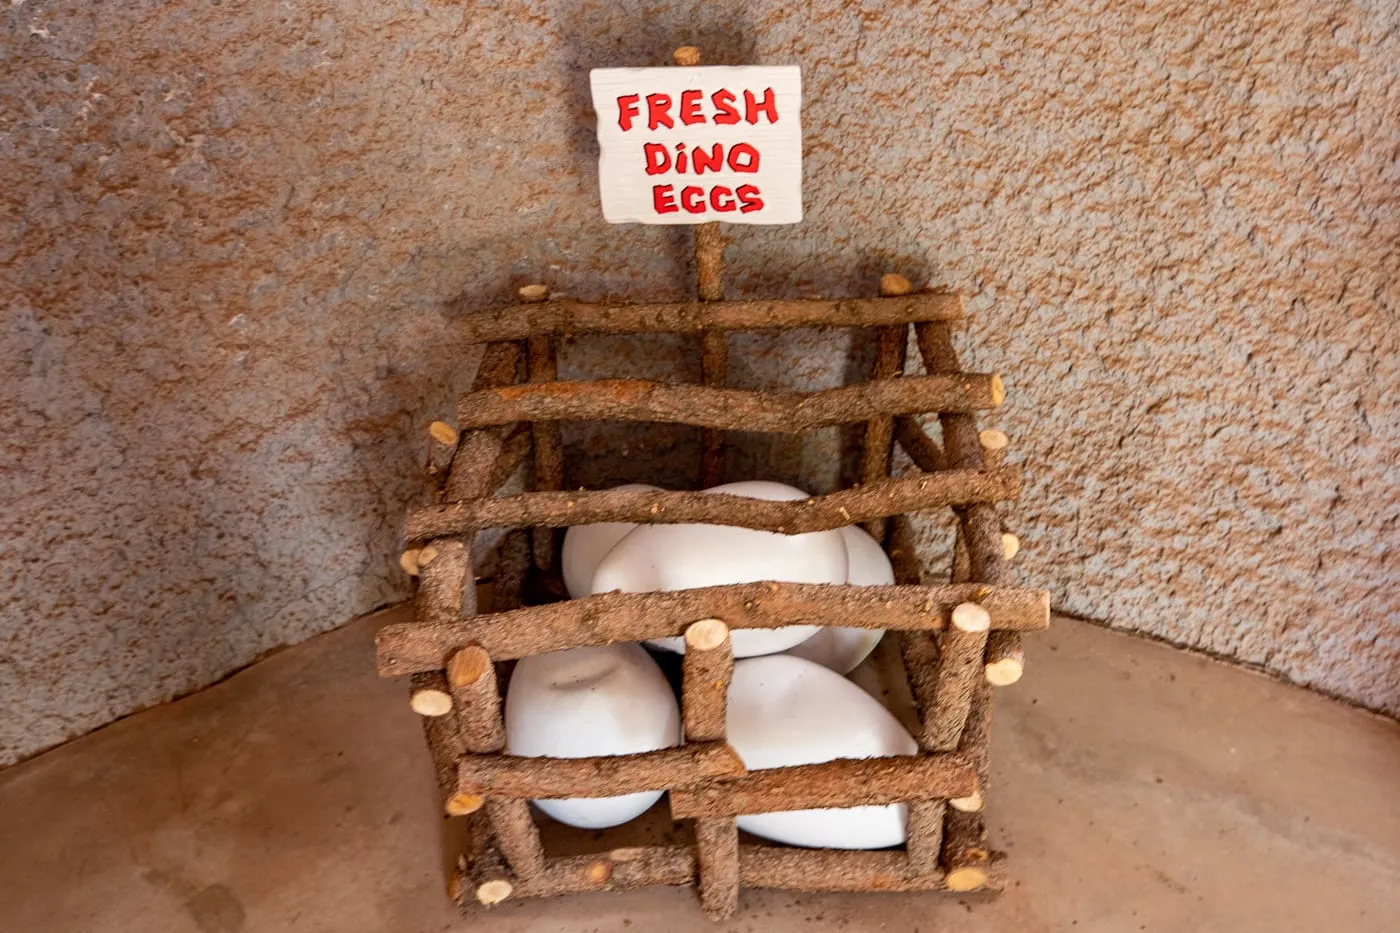 Fresh dino eggs inside the Grocery Store at Flintstones Bedrock City in Williams, Arizona - Arizona Roadside Attraction